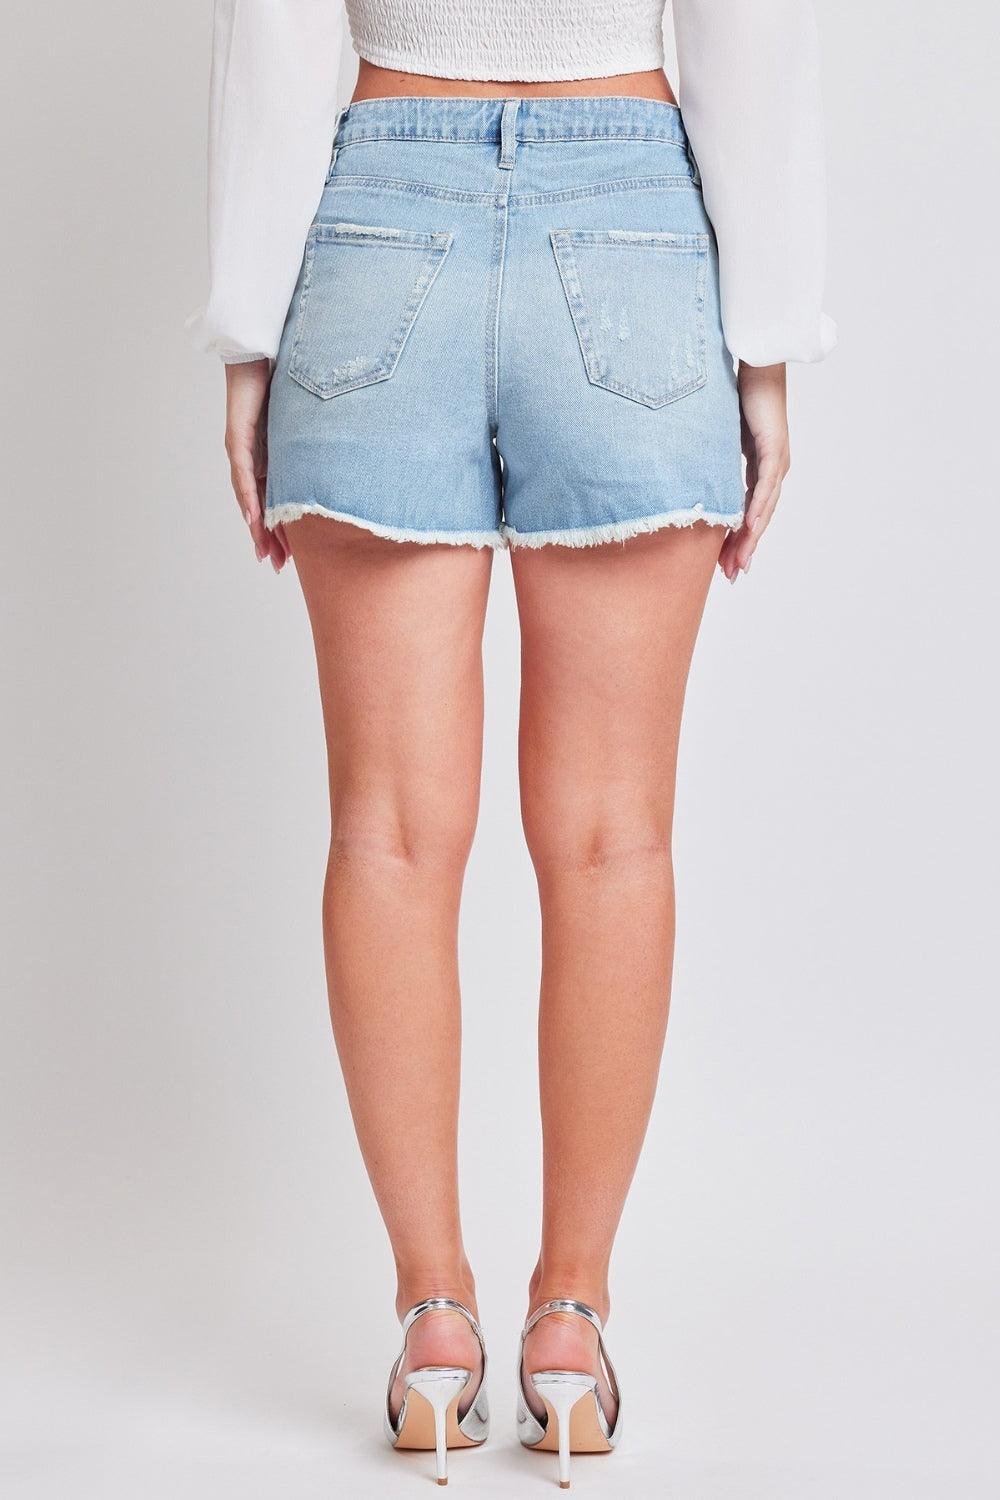 YMI Jeanswea Distressed Frayed Hem Denim Shorts - AMIClubwear